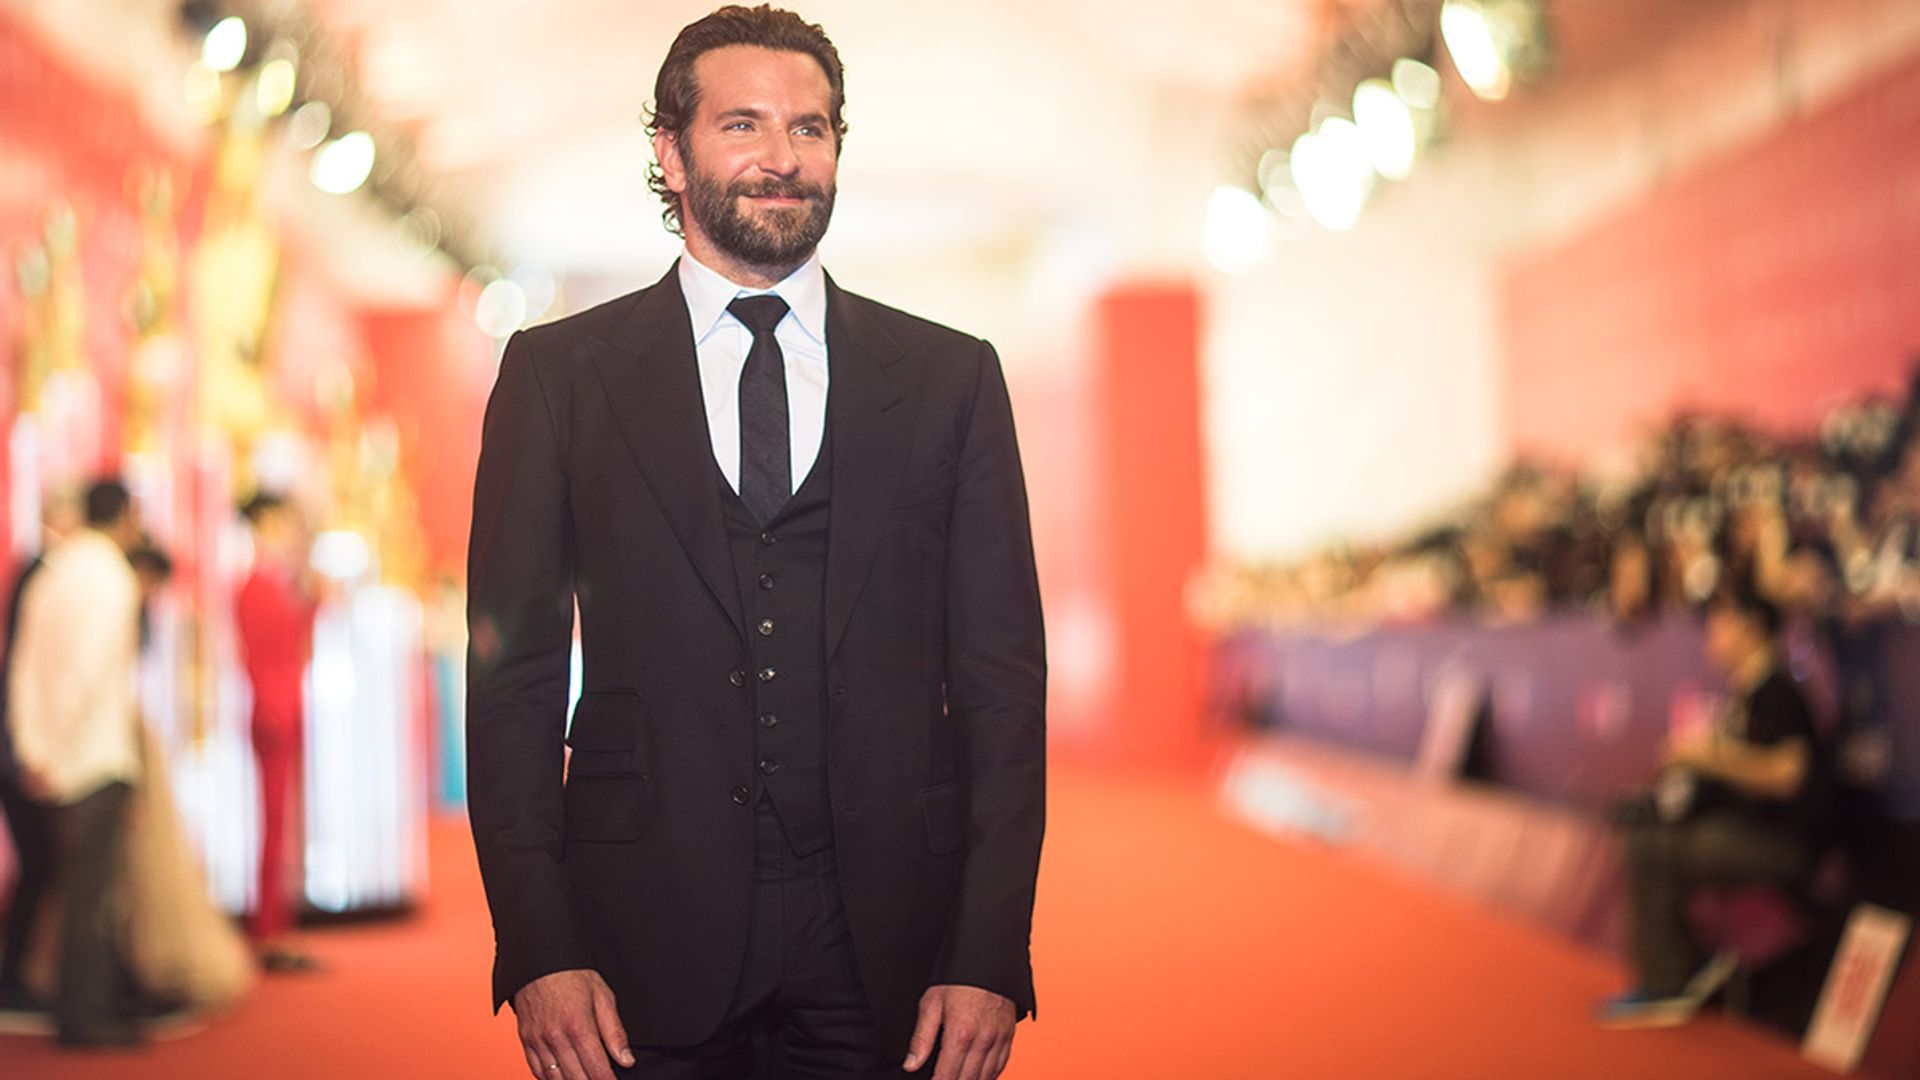 Fashion Awards 2013 Best dressed male: Bradley Cooper